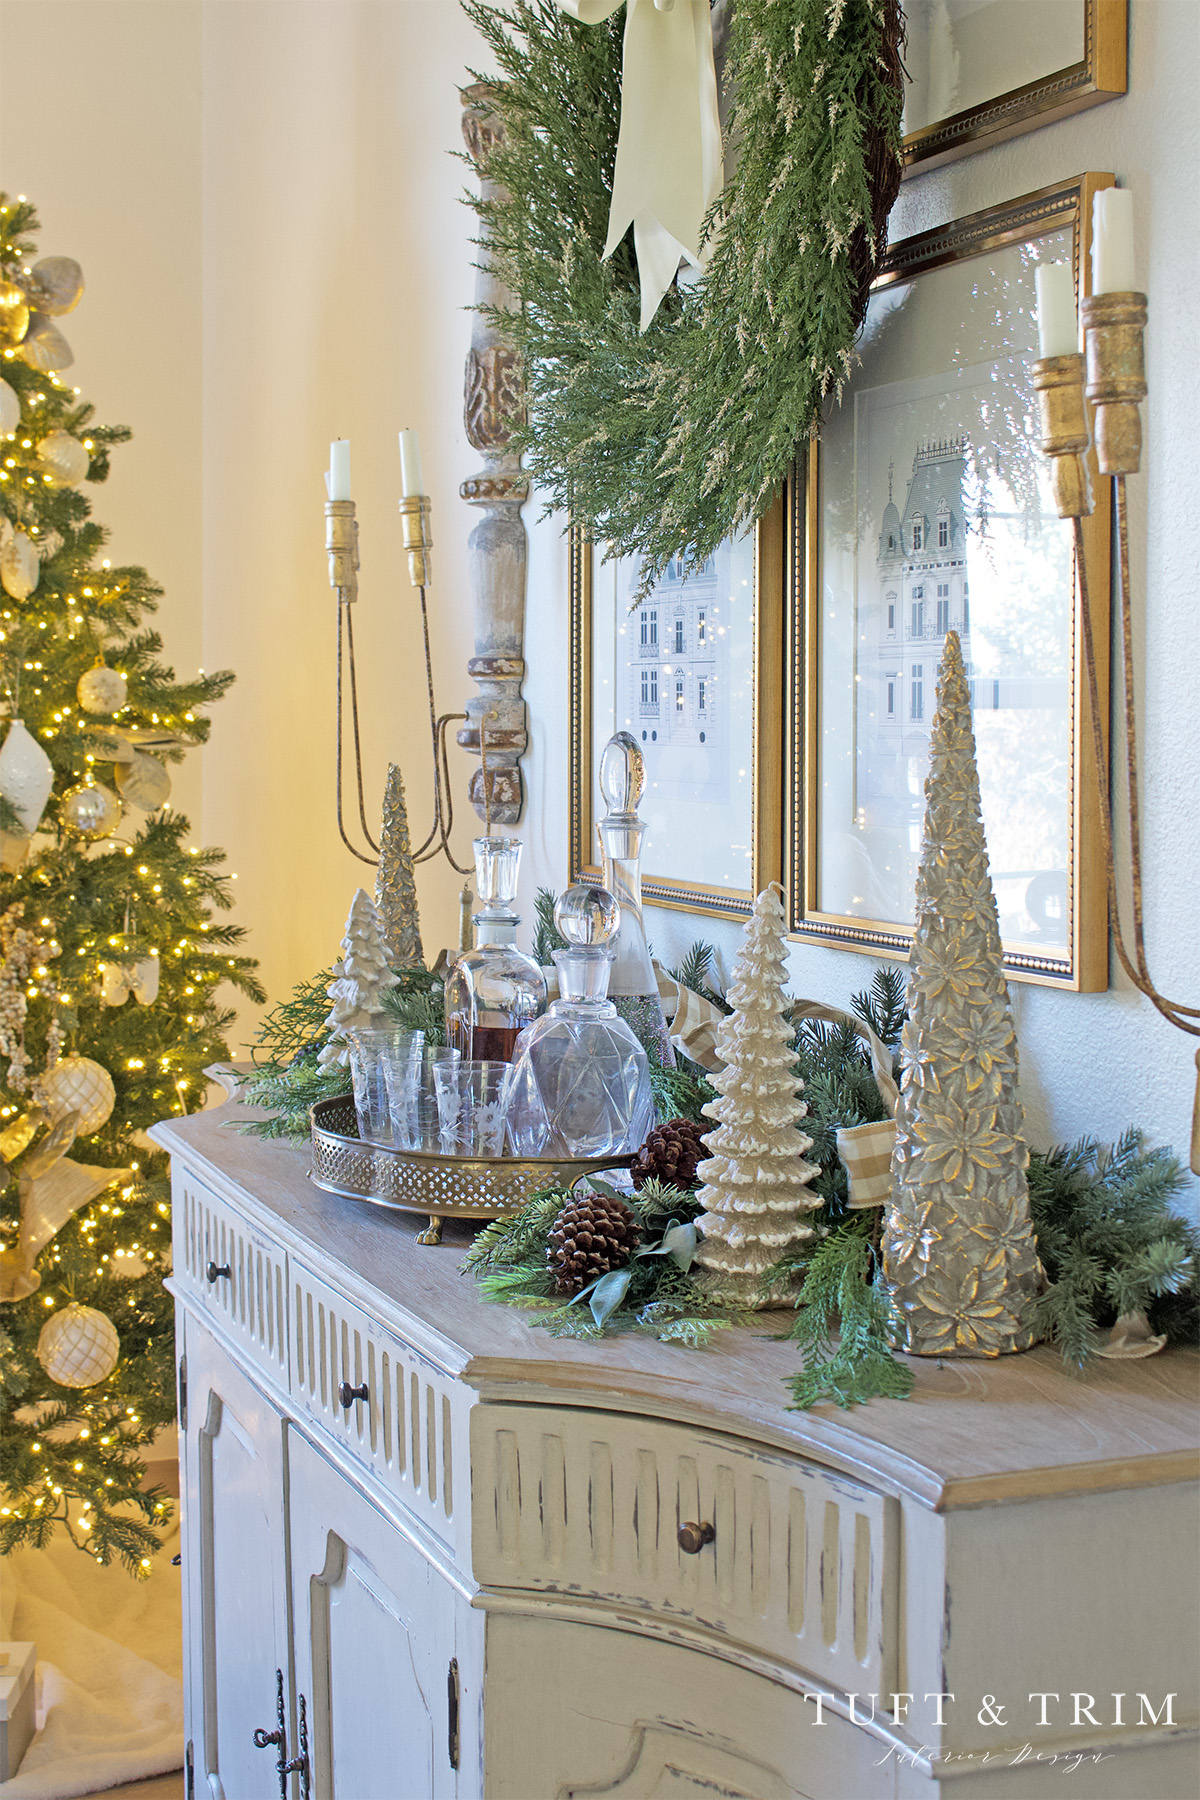 Holiday Magnolia Tablescape with Tuft & Trim Interior Design